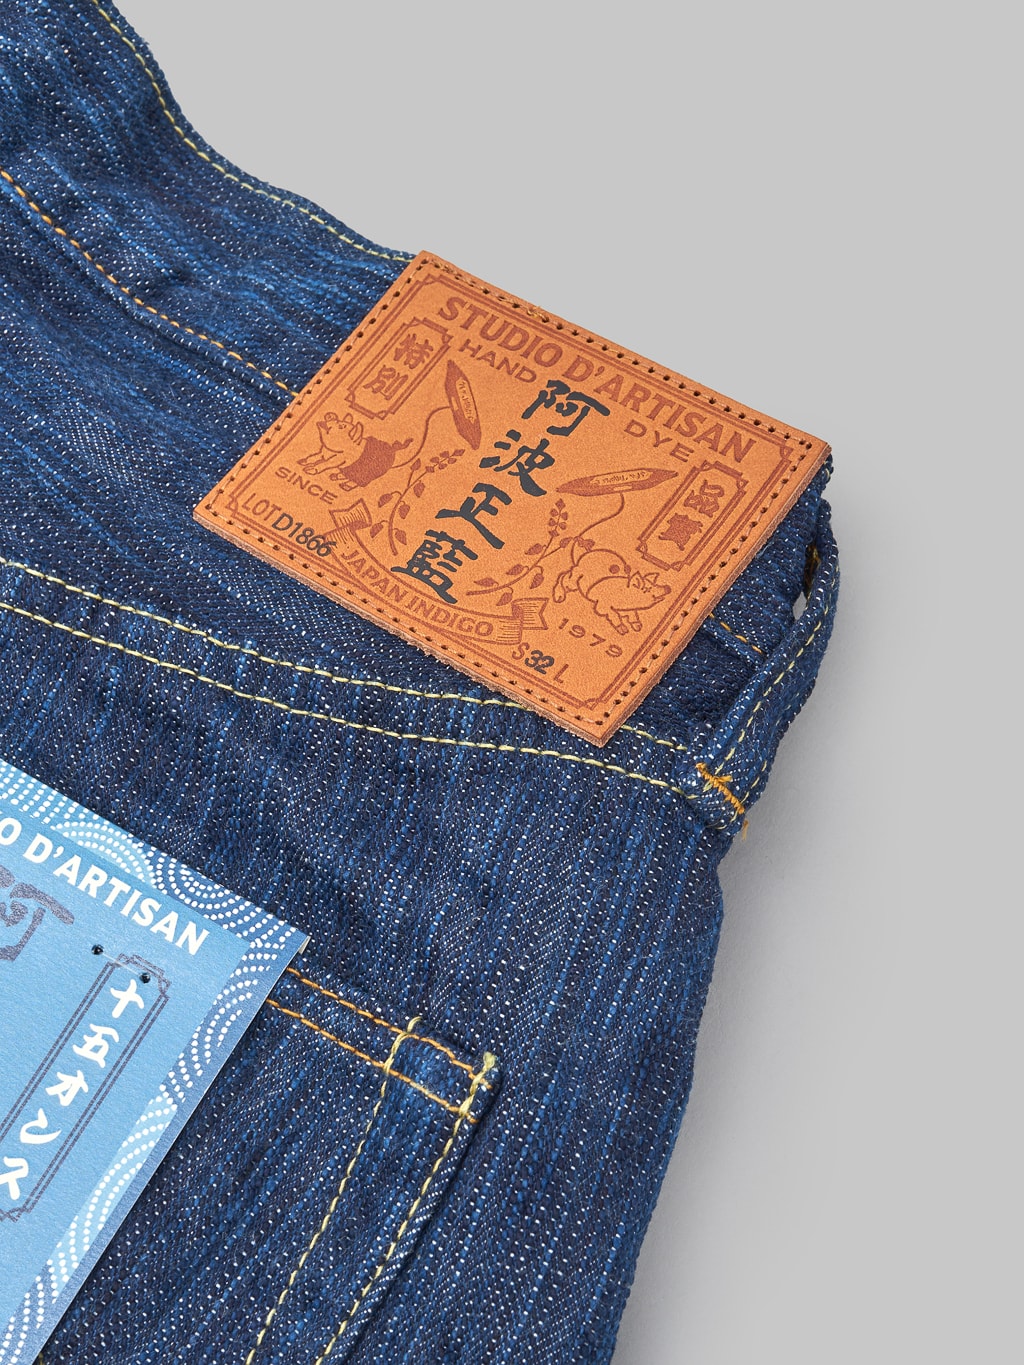 Studio dartisan tokushima awa shoai regular straight jeans leather patch